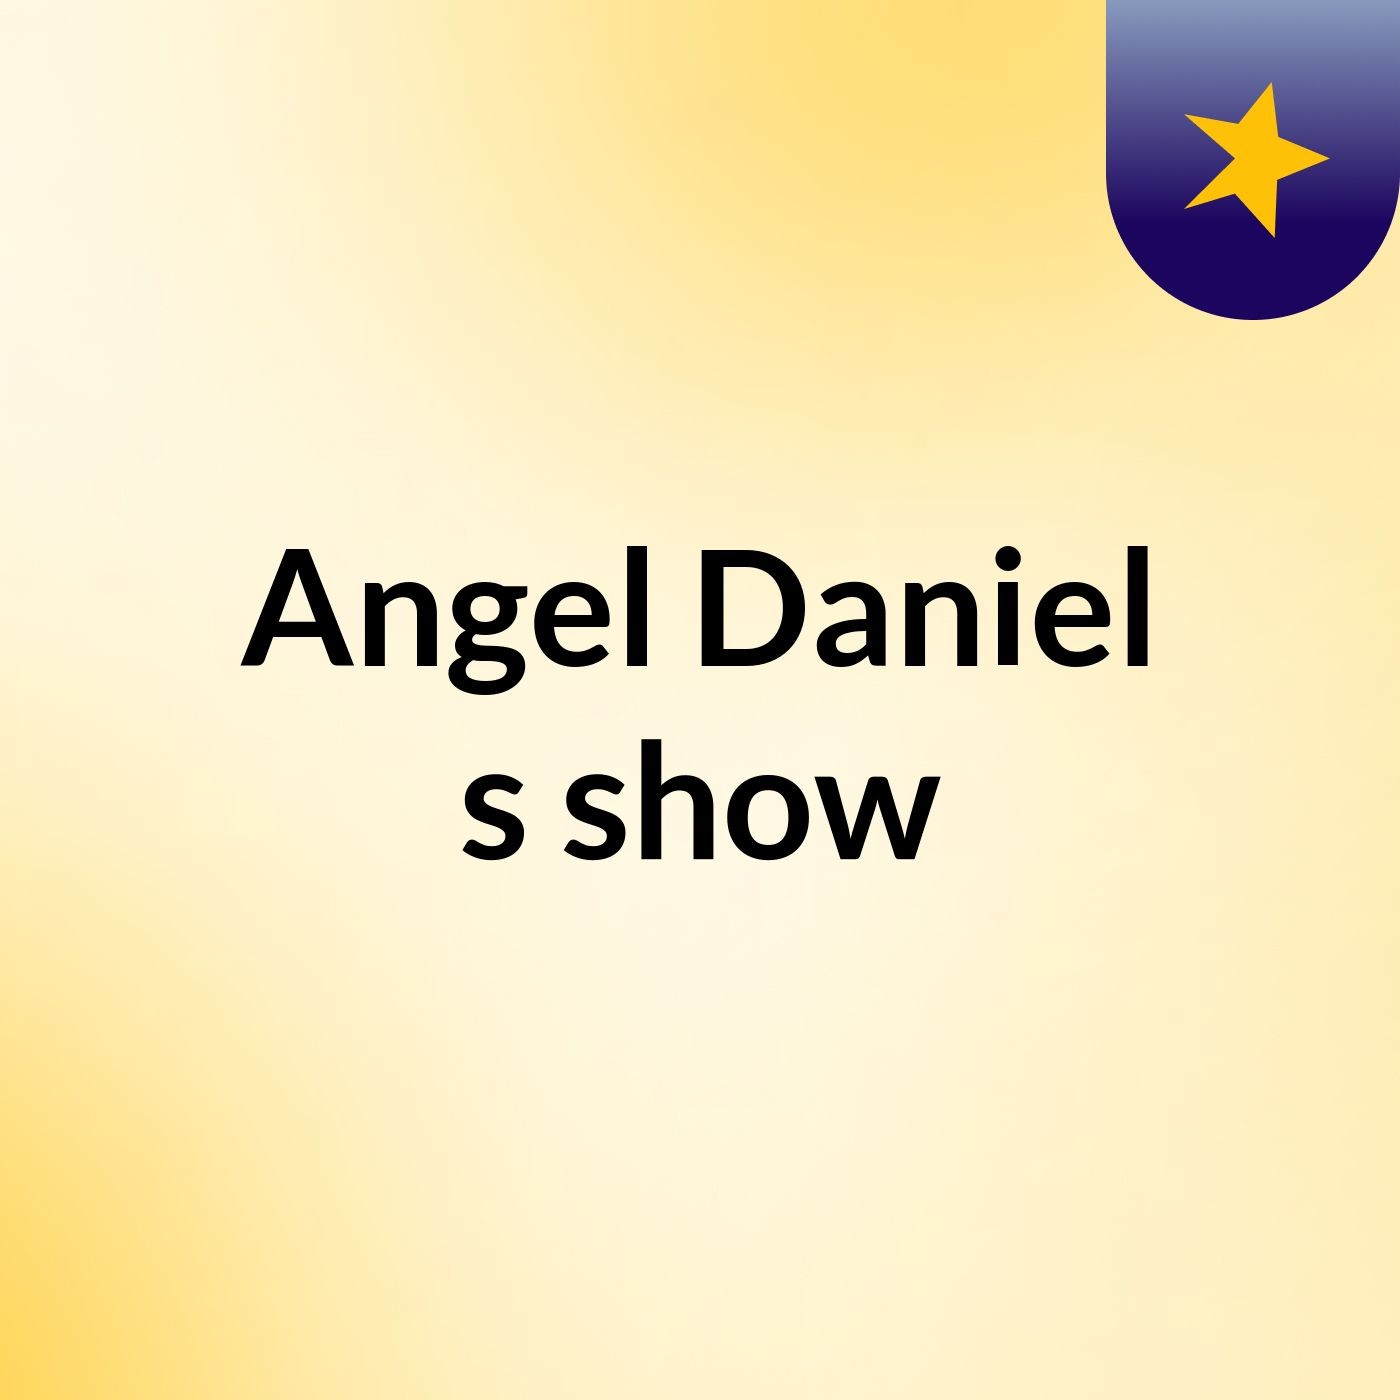 Angel Daniel's show